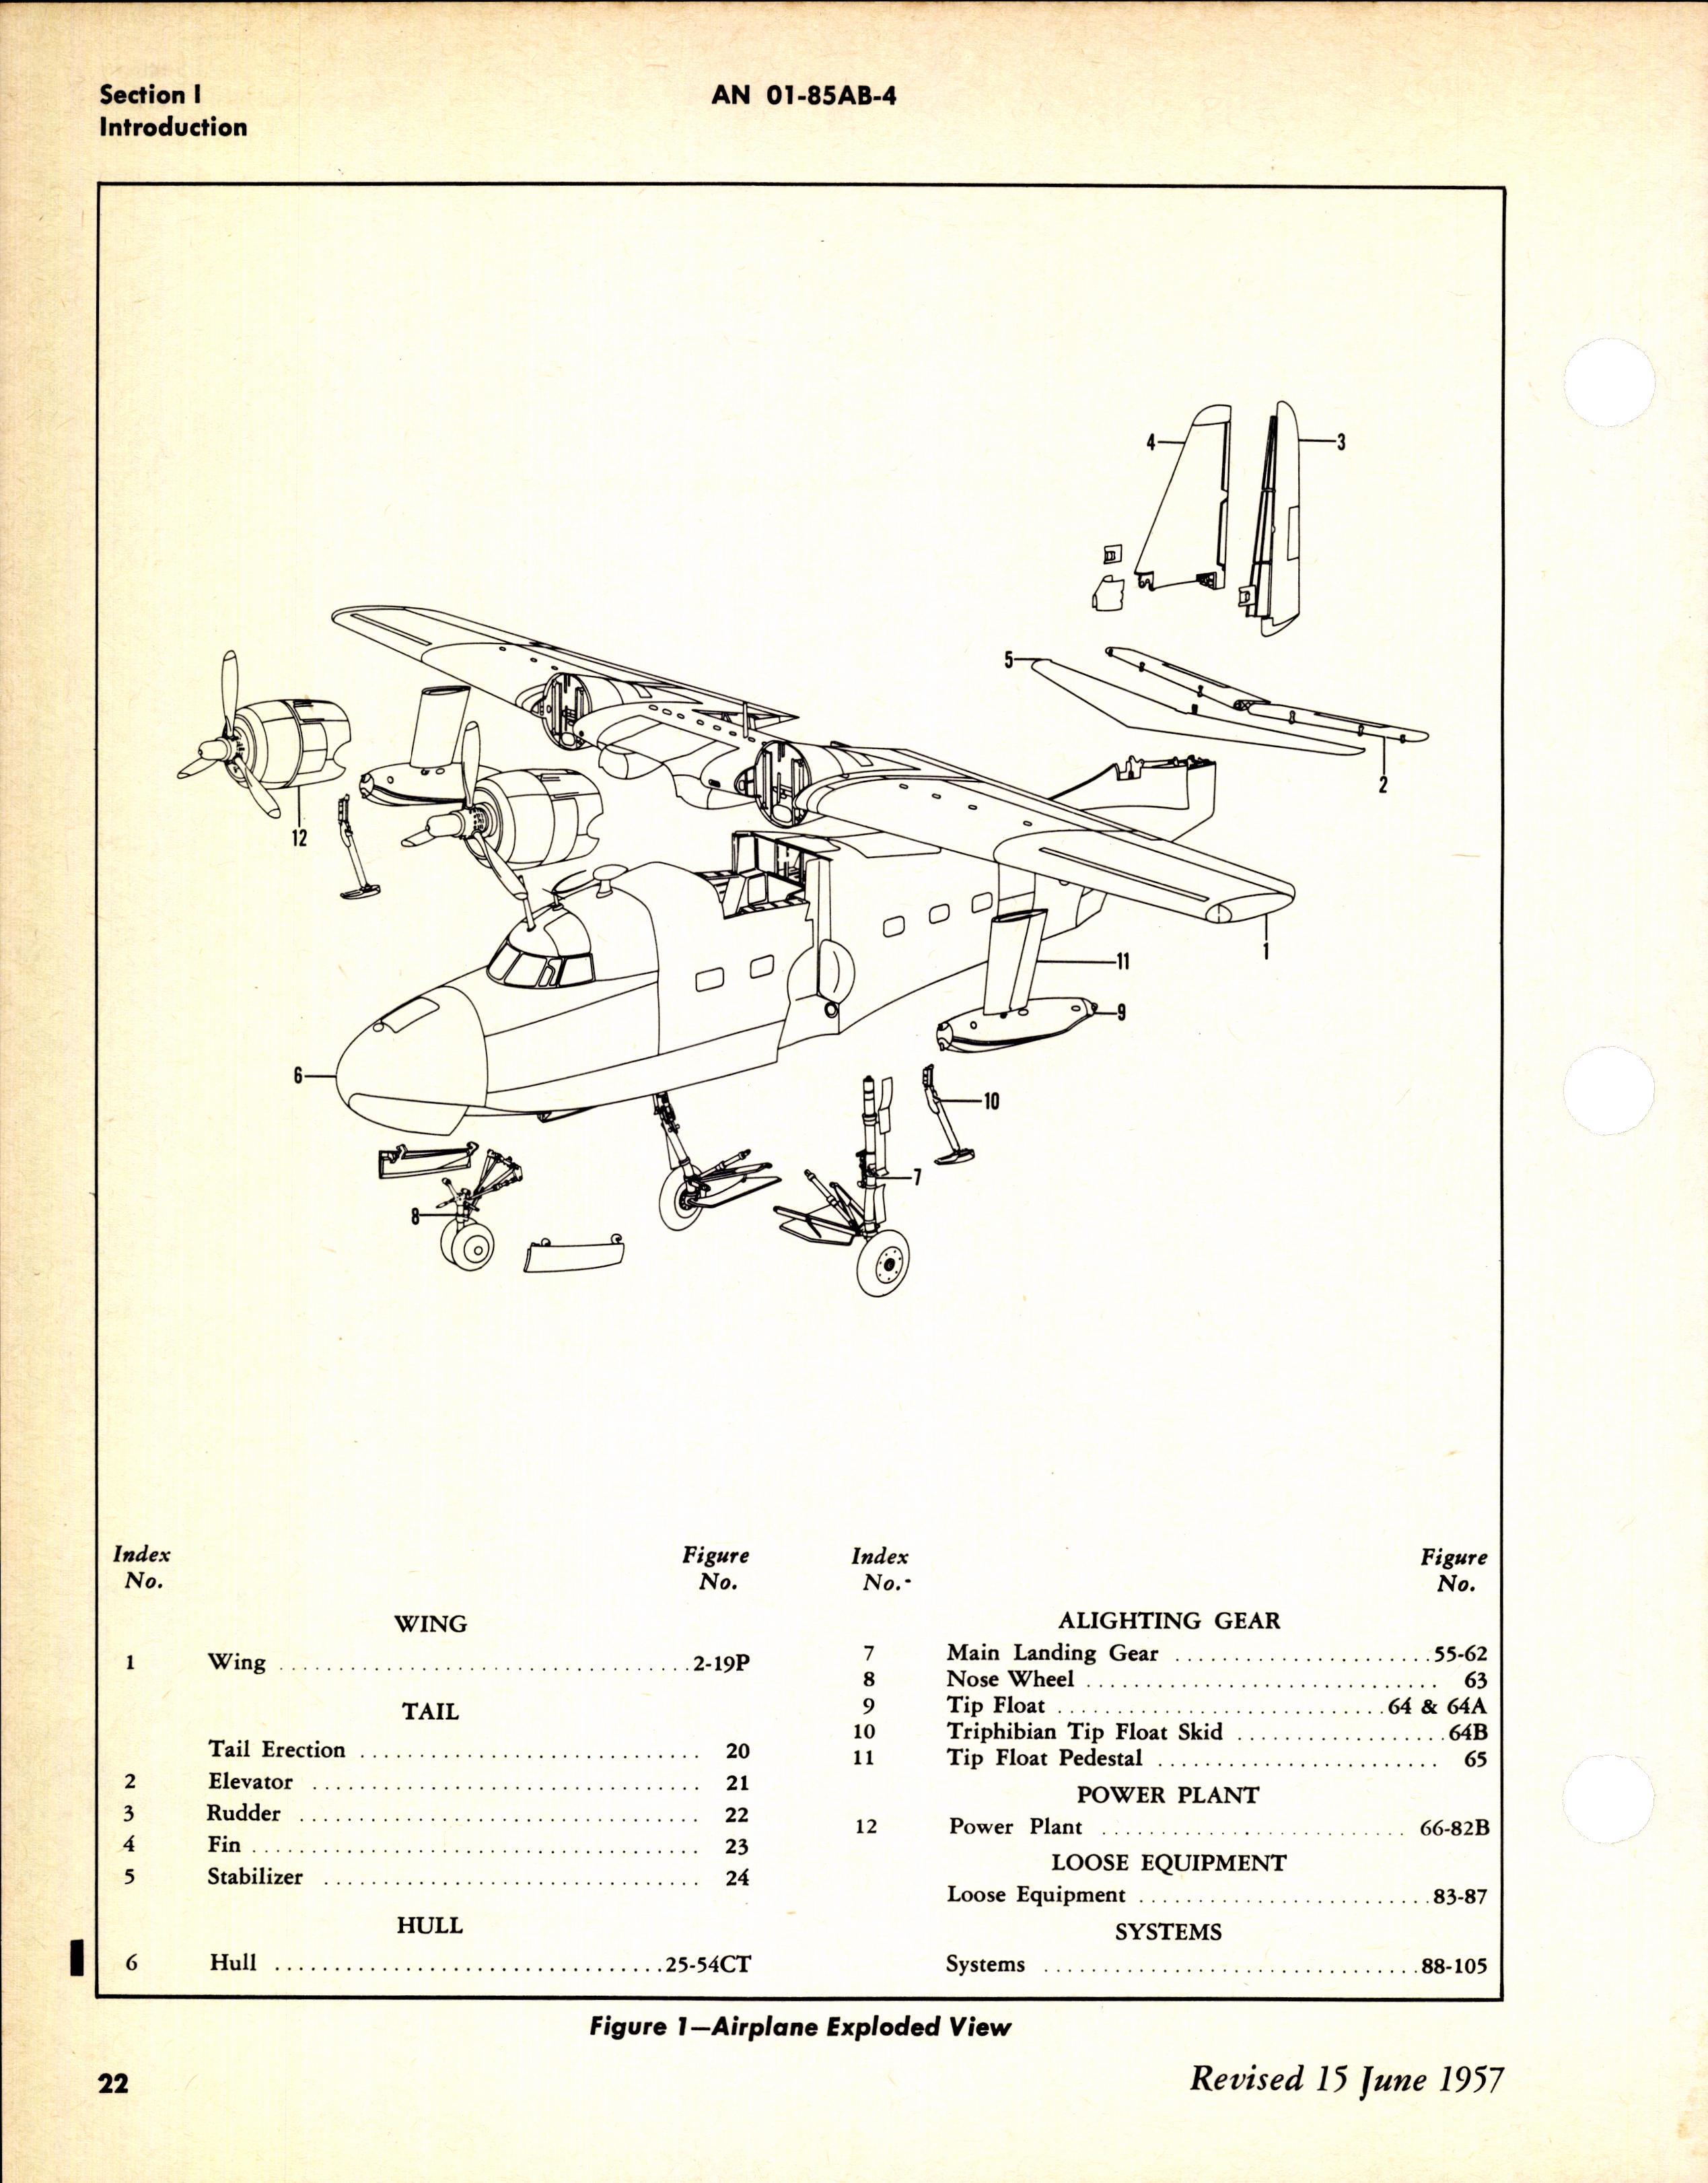 Sample page 70 from AirCorps Library document: Parts Catalog for SA-16A, SA-16B, and UF-1 Aircraft